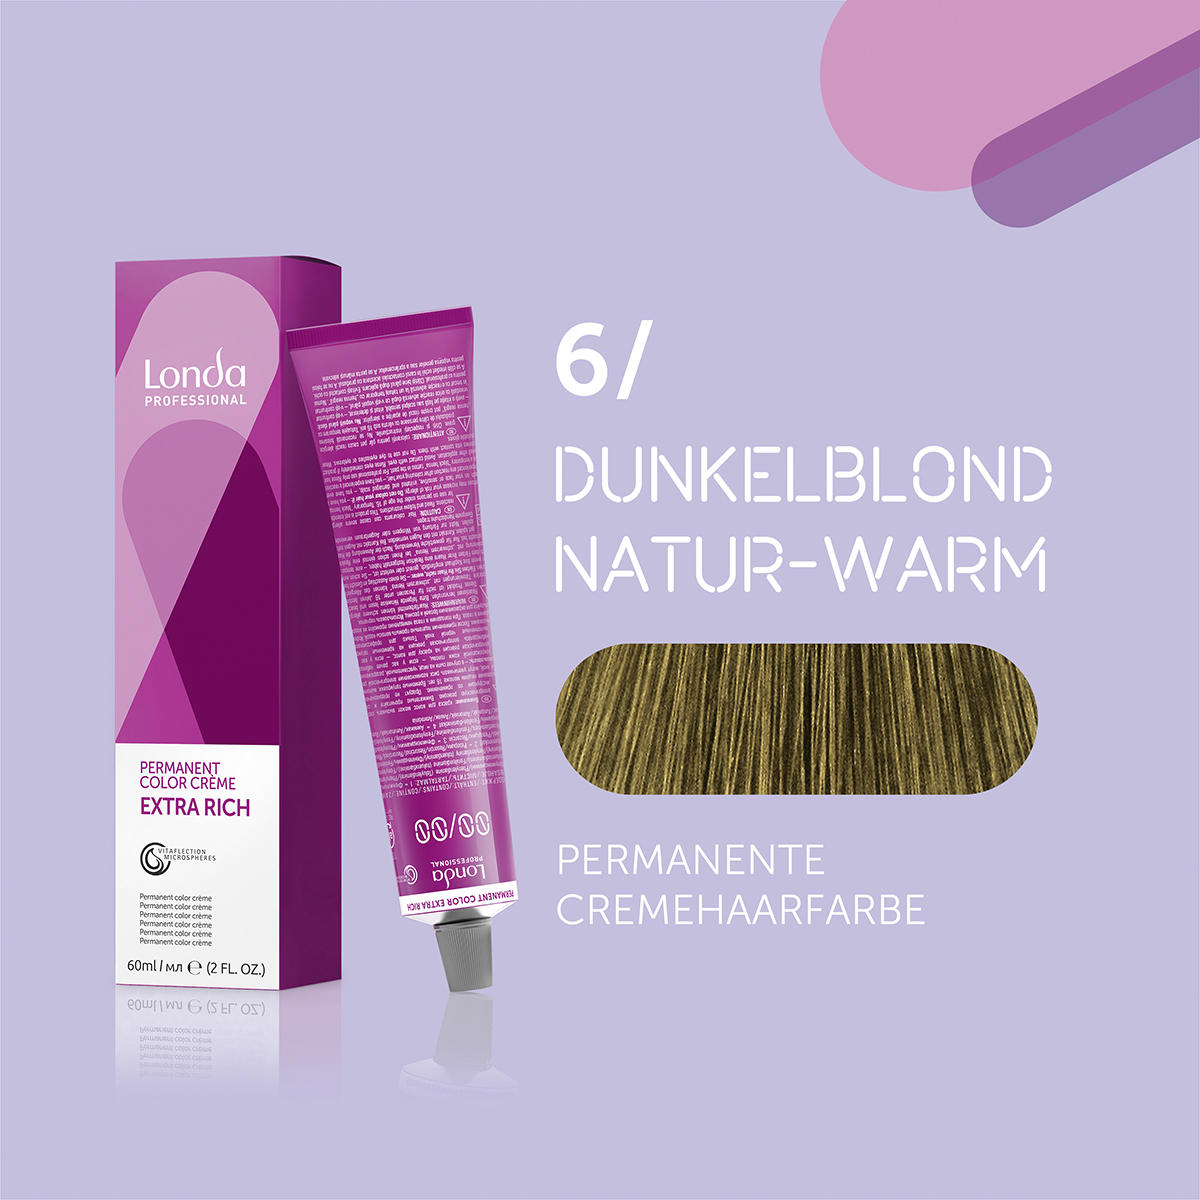 Londa Permanente Cremehaarfarbe Extra Rich 6/ Dunkelblond Natur Warm, Tube 60 ml - 1